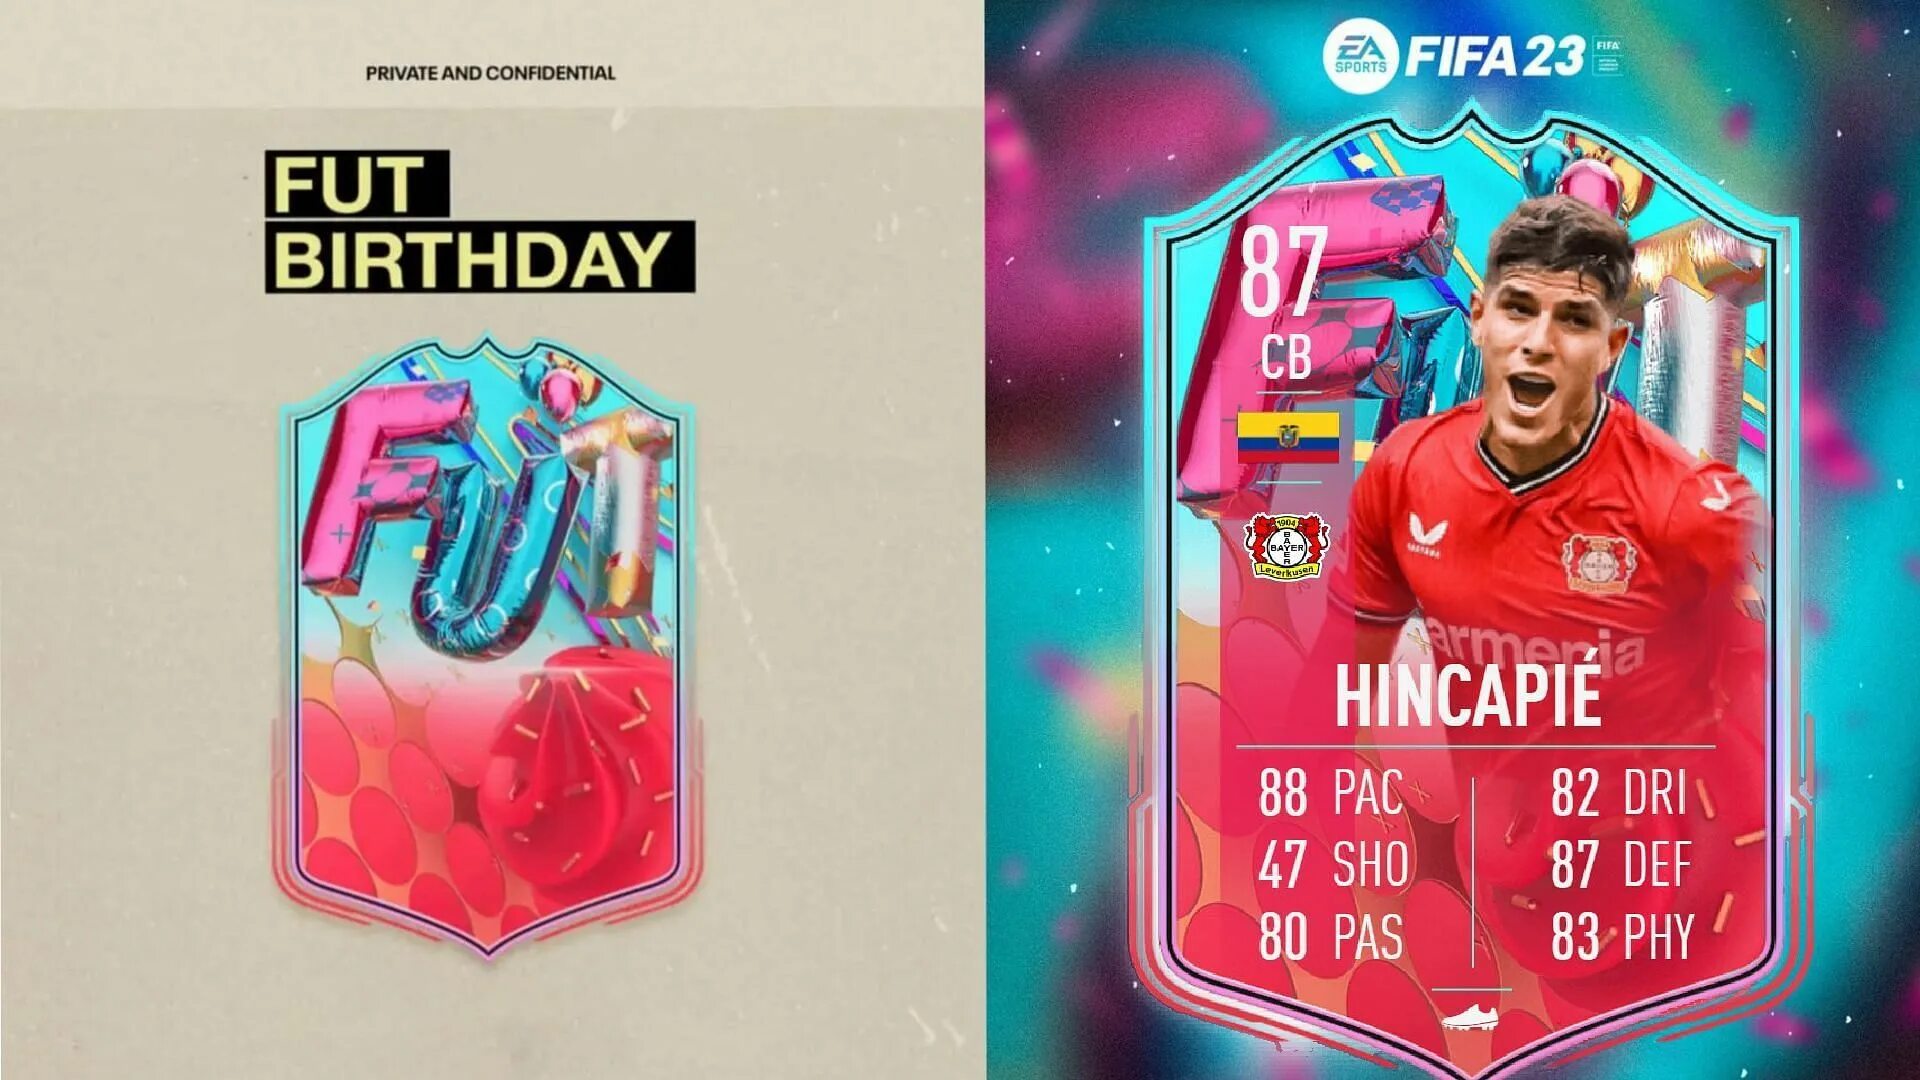 Fut birthday. ФИФА 23. Карточки FIFA 23. FUT Birthday FIFA 23. Карточка ФИФА пустая.